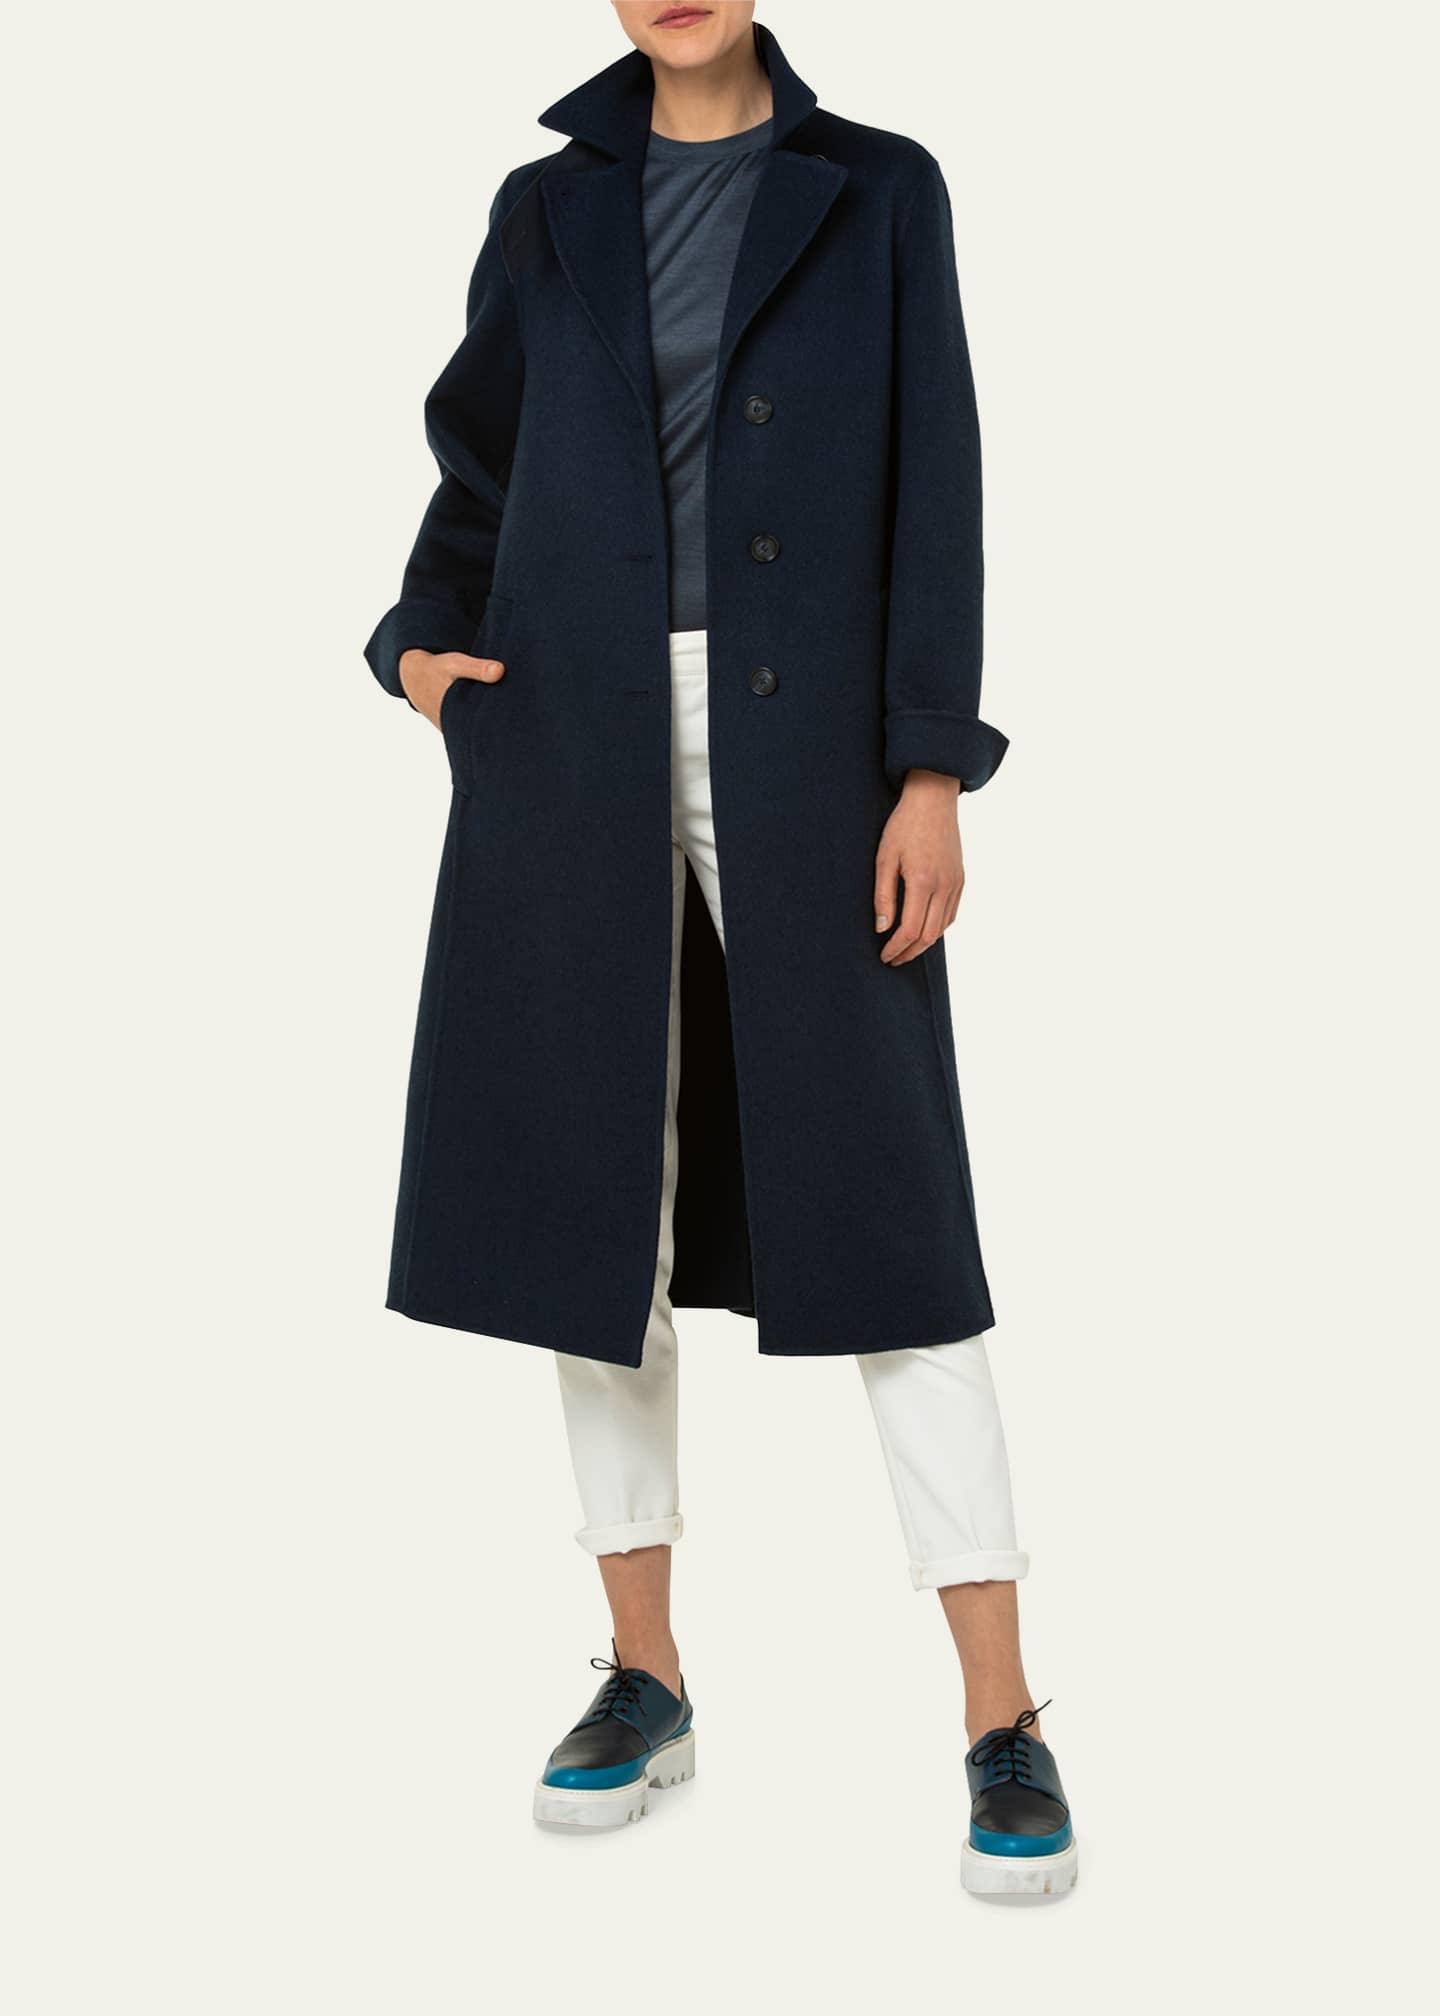 Akris Cashmere Double-Face Coat w/ Leather Strap - Bergdorf Goodman